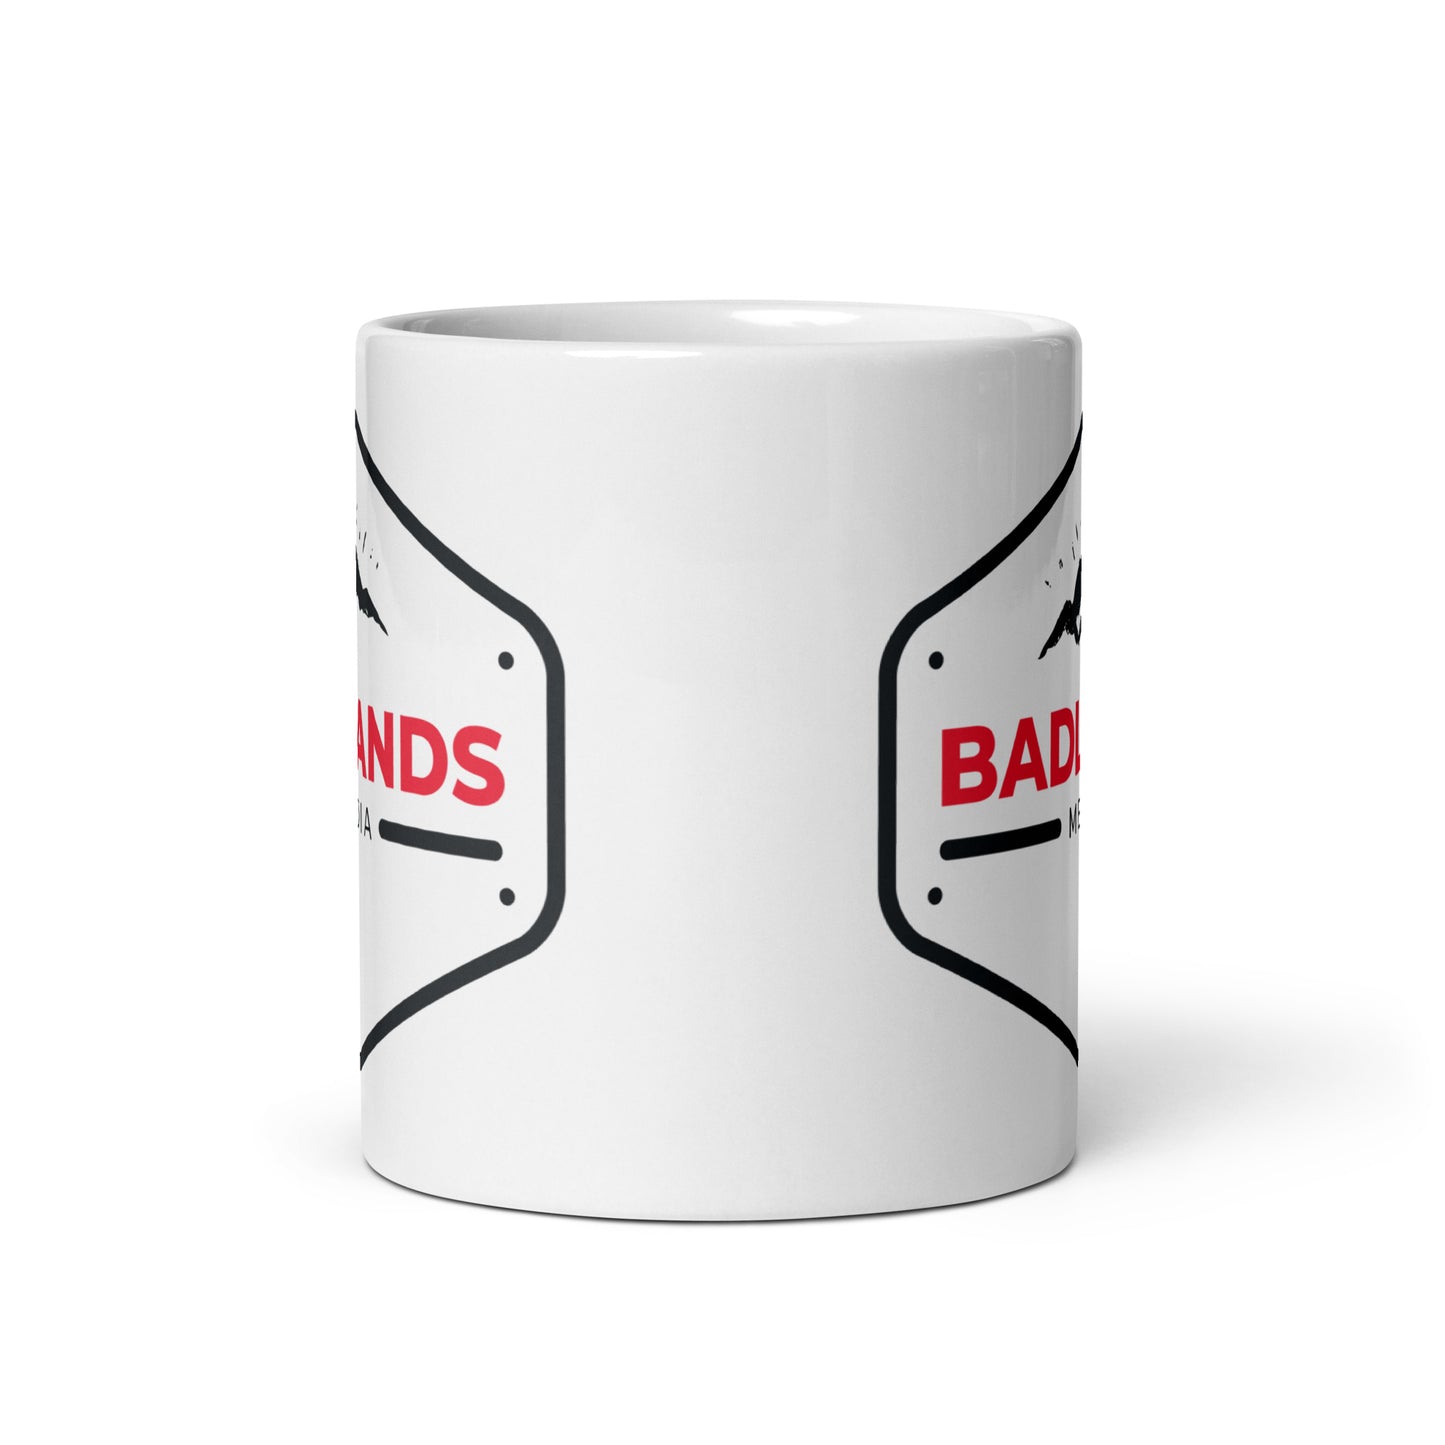 Badlands White Glossy Mug 11oz, 15oz or 20oz